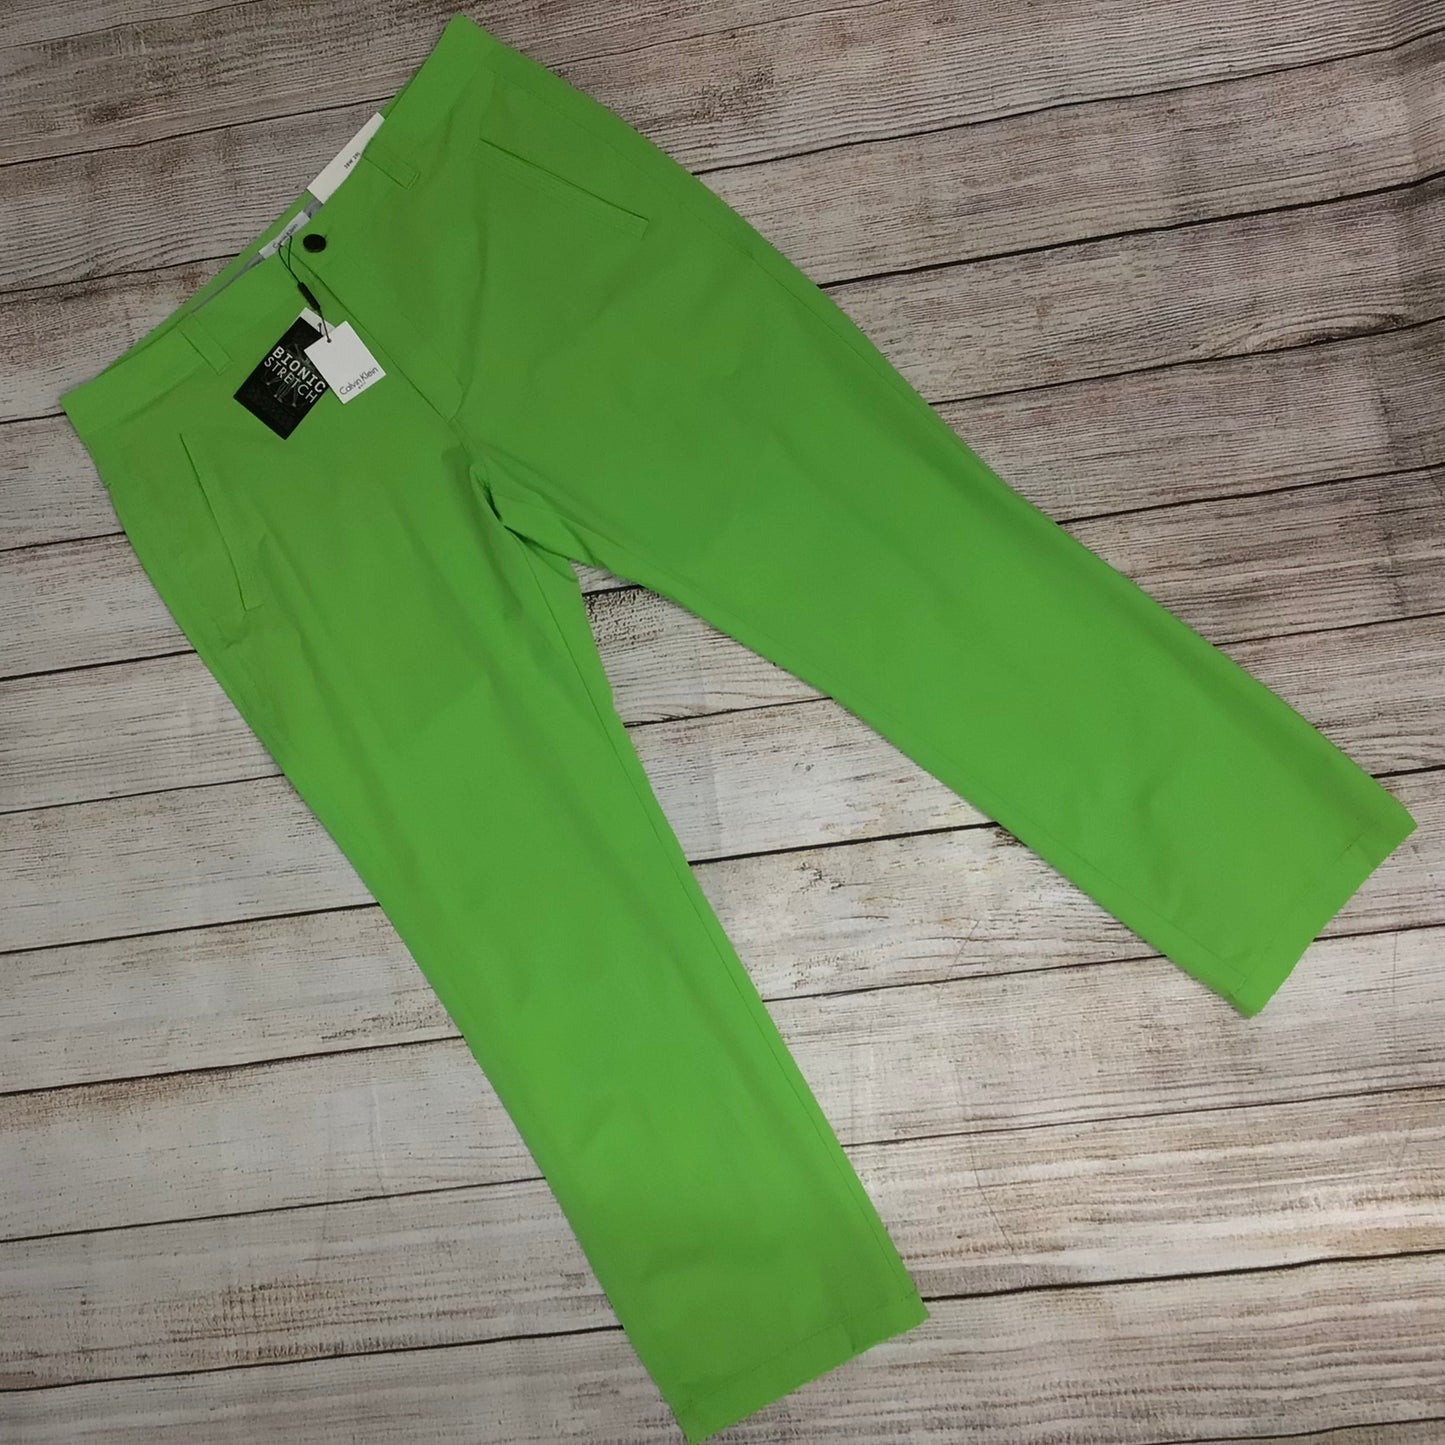 BNWT Calvin Klein Golf Bionic Stretch Fresh Lime Green Trousers Size W38 L29